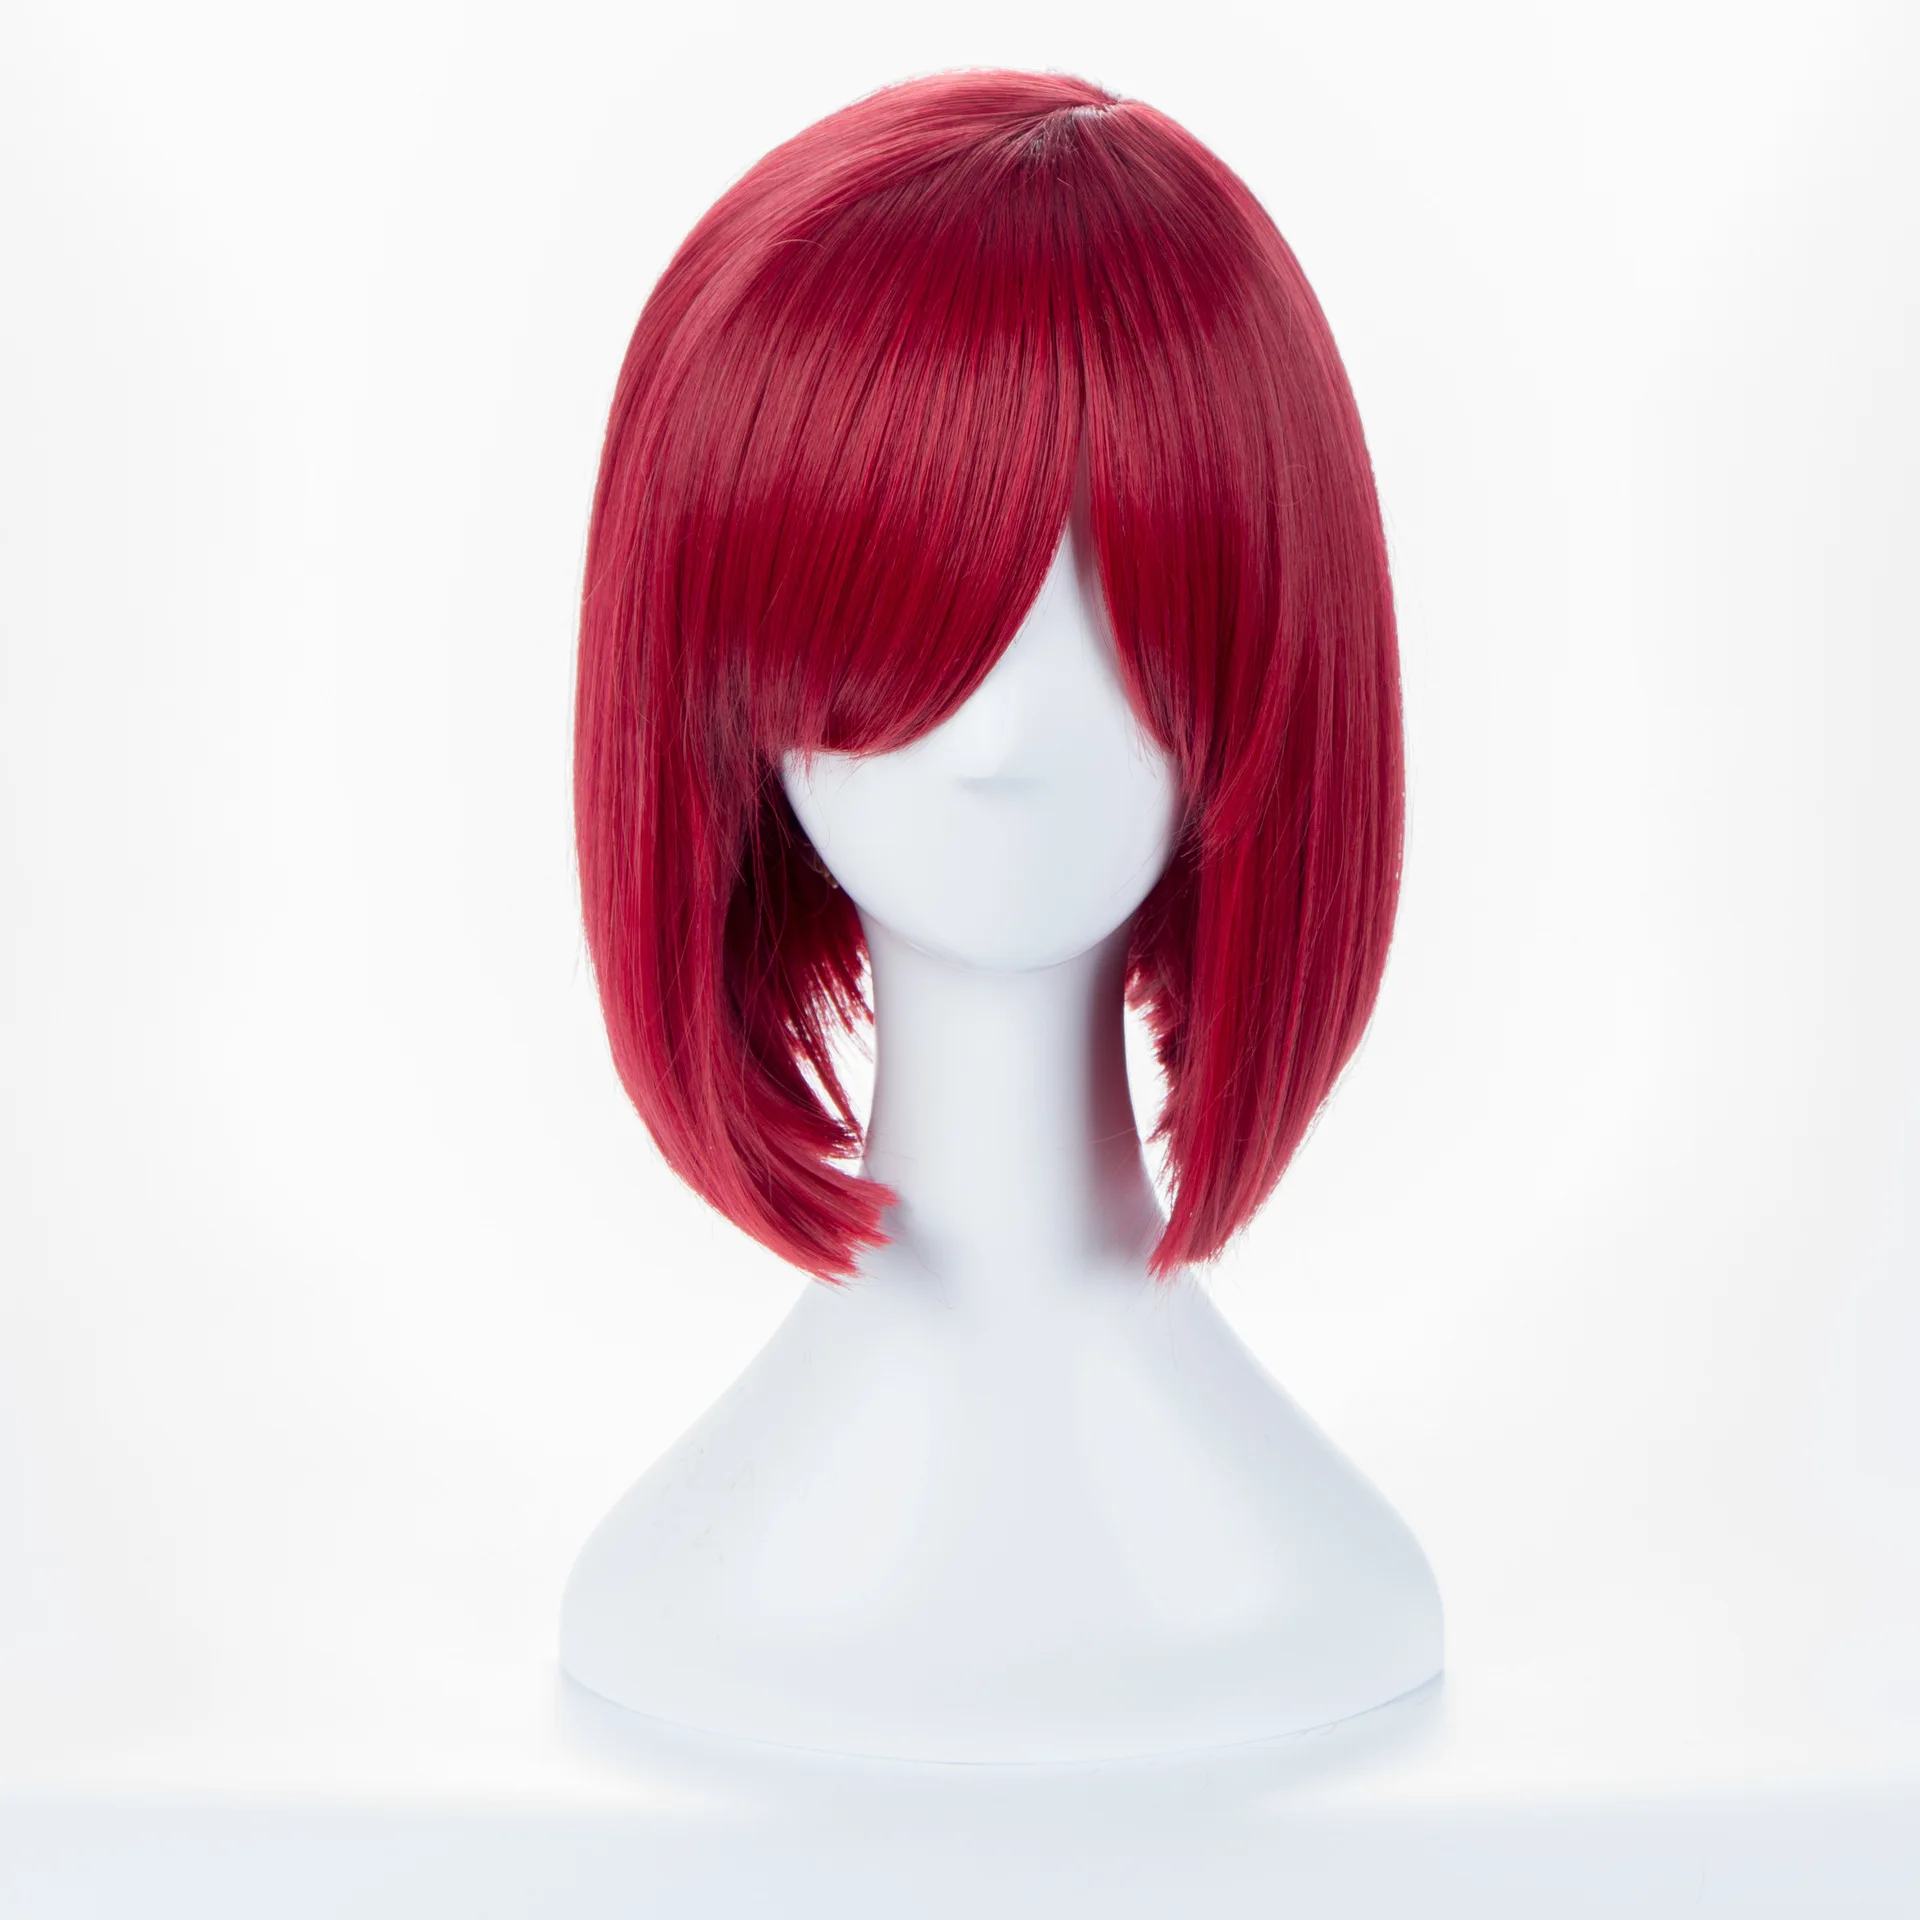 Anime Danganronpa V3 Killing Harmony Yumeno Himiko Cosplay Wig Red Short Dangan Ronpa Heat Resistant Hair Party Wigs + Wig Cap